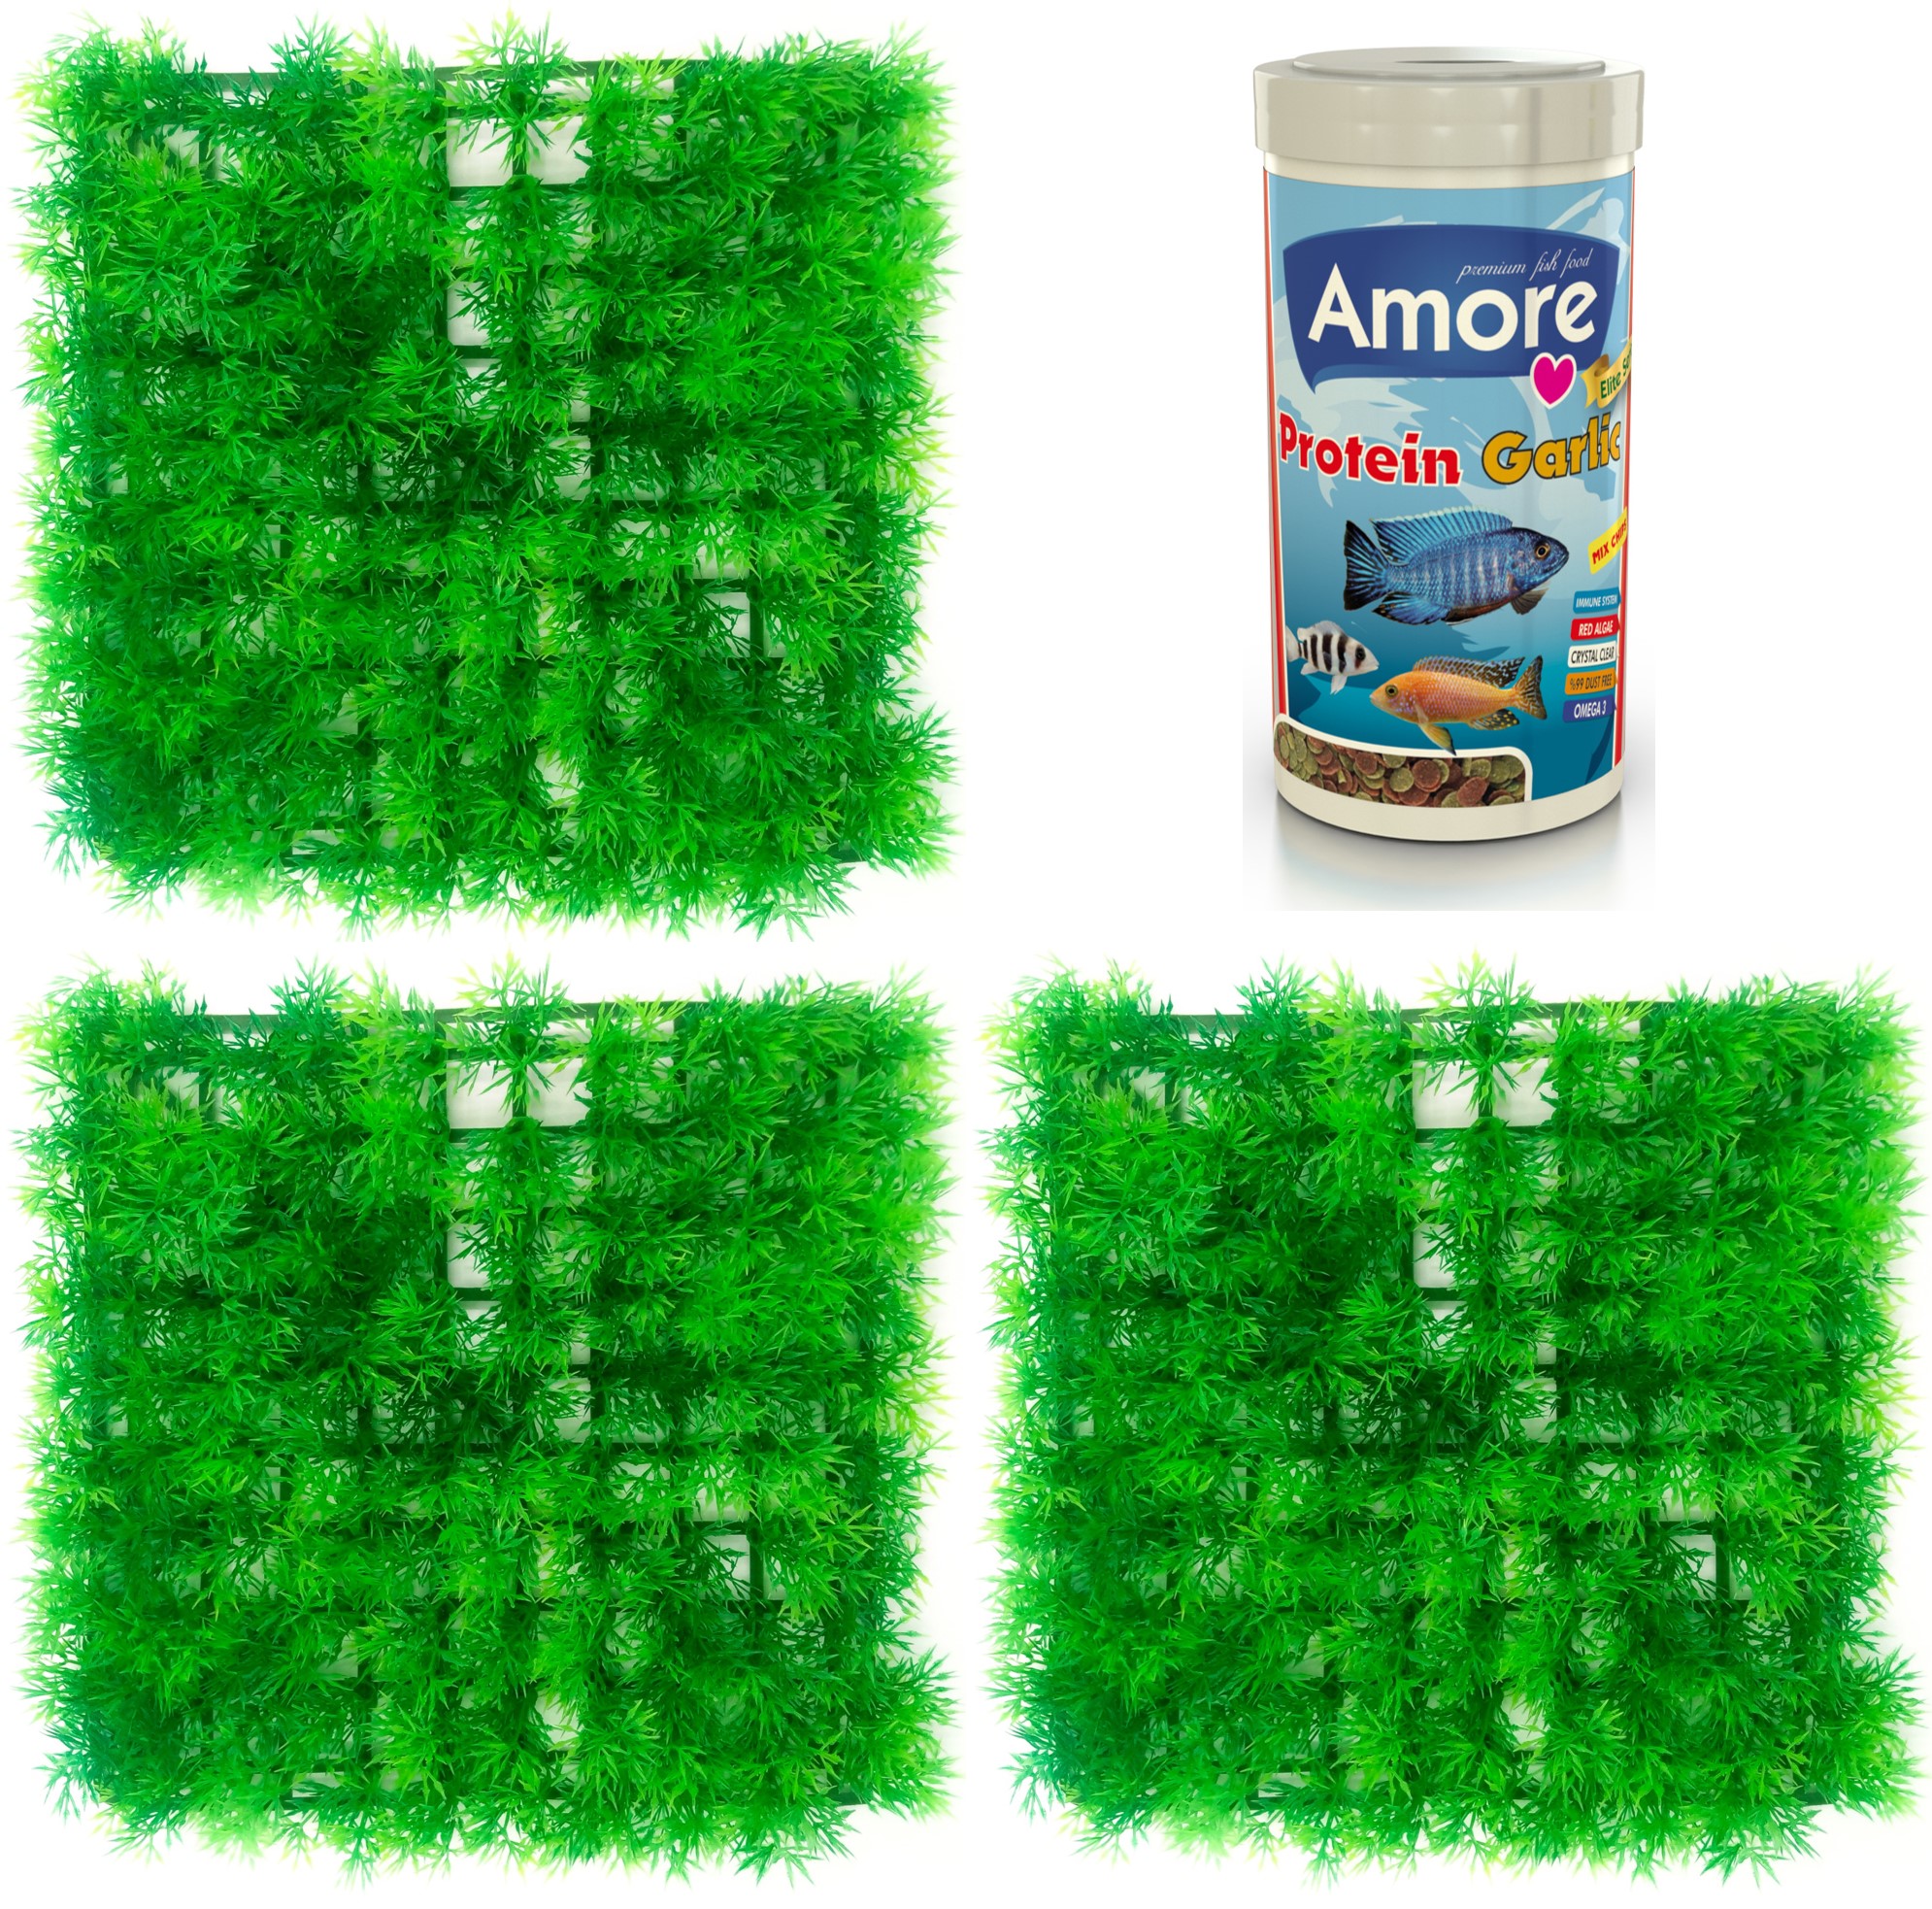 Amore Taban Bitkisi 3 Adet 25x25cm + Protein Garlic Pro Chips 250ml Kutu Akvaryum Balık Yemi